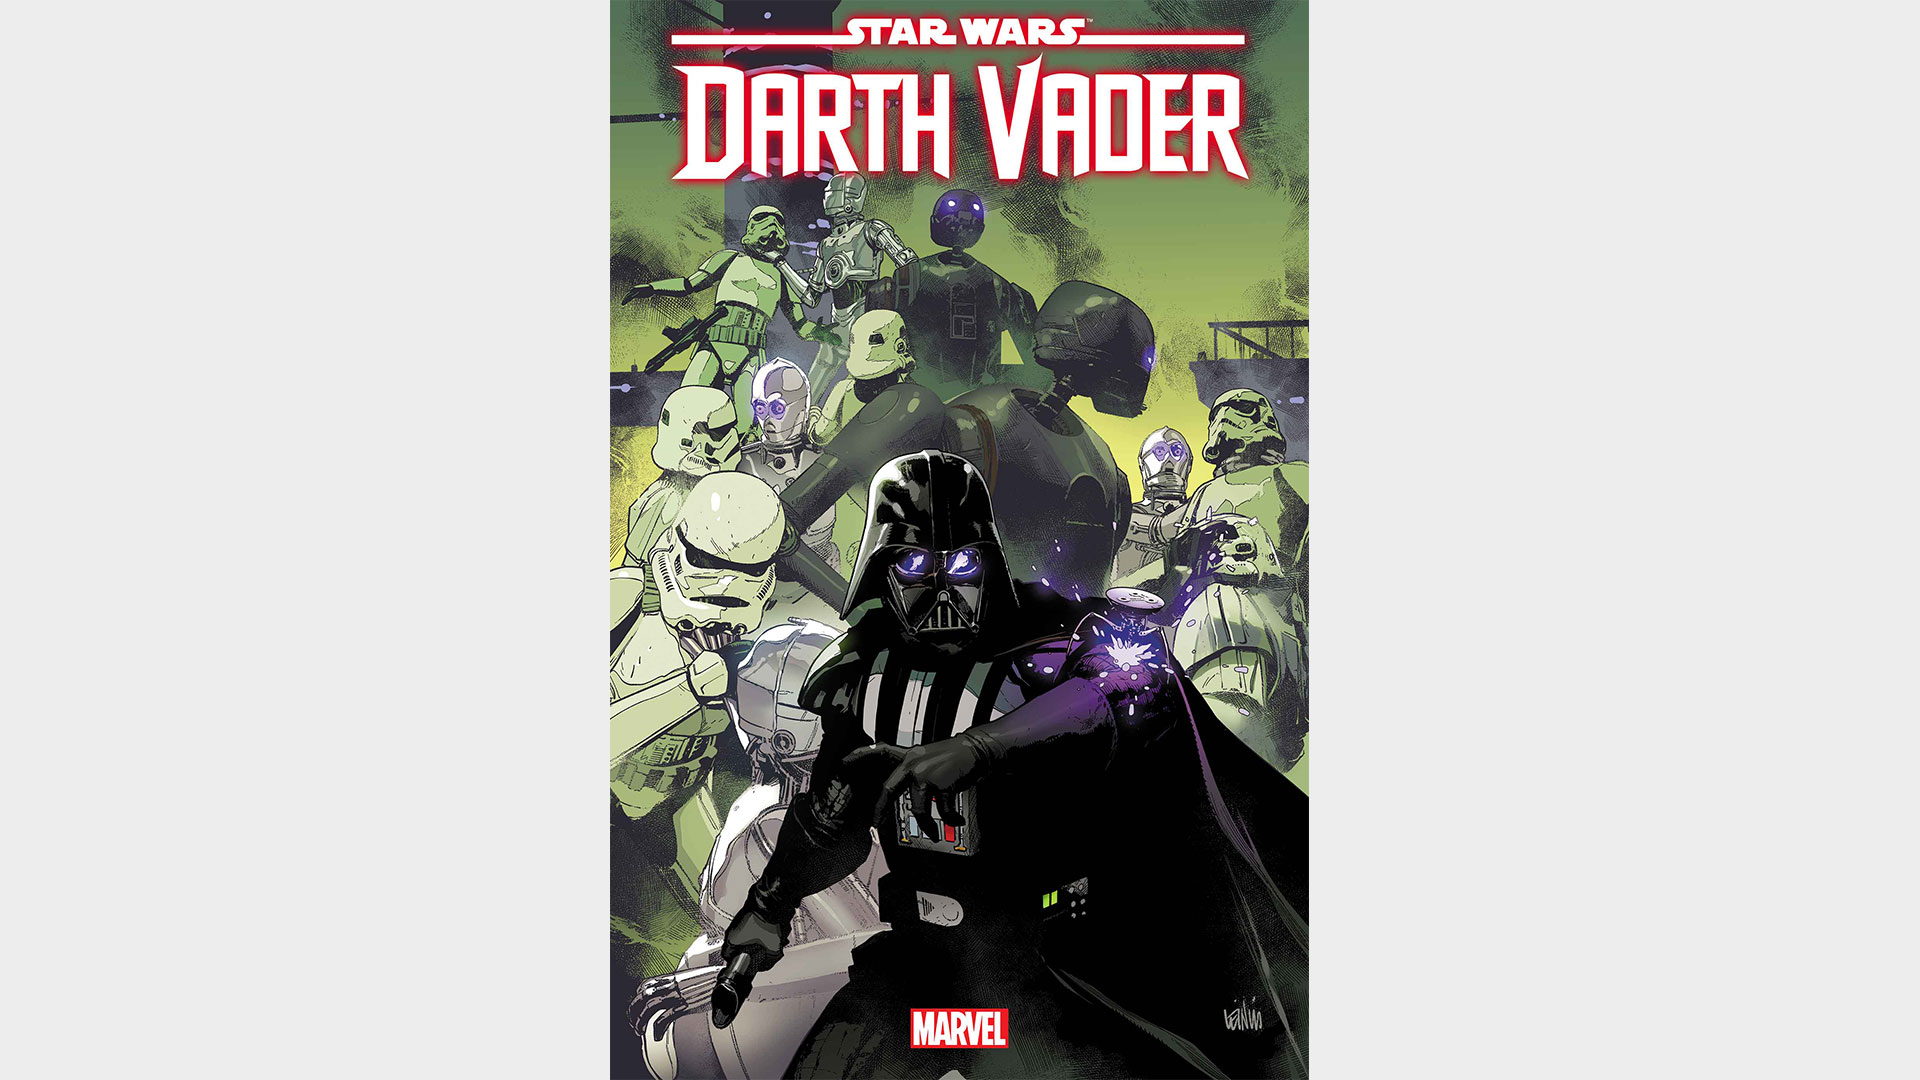 Star Wars Dark Vador #38 couverture